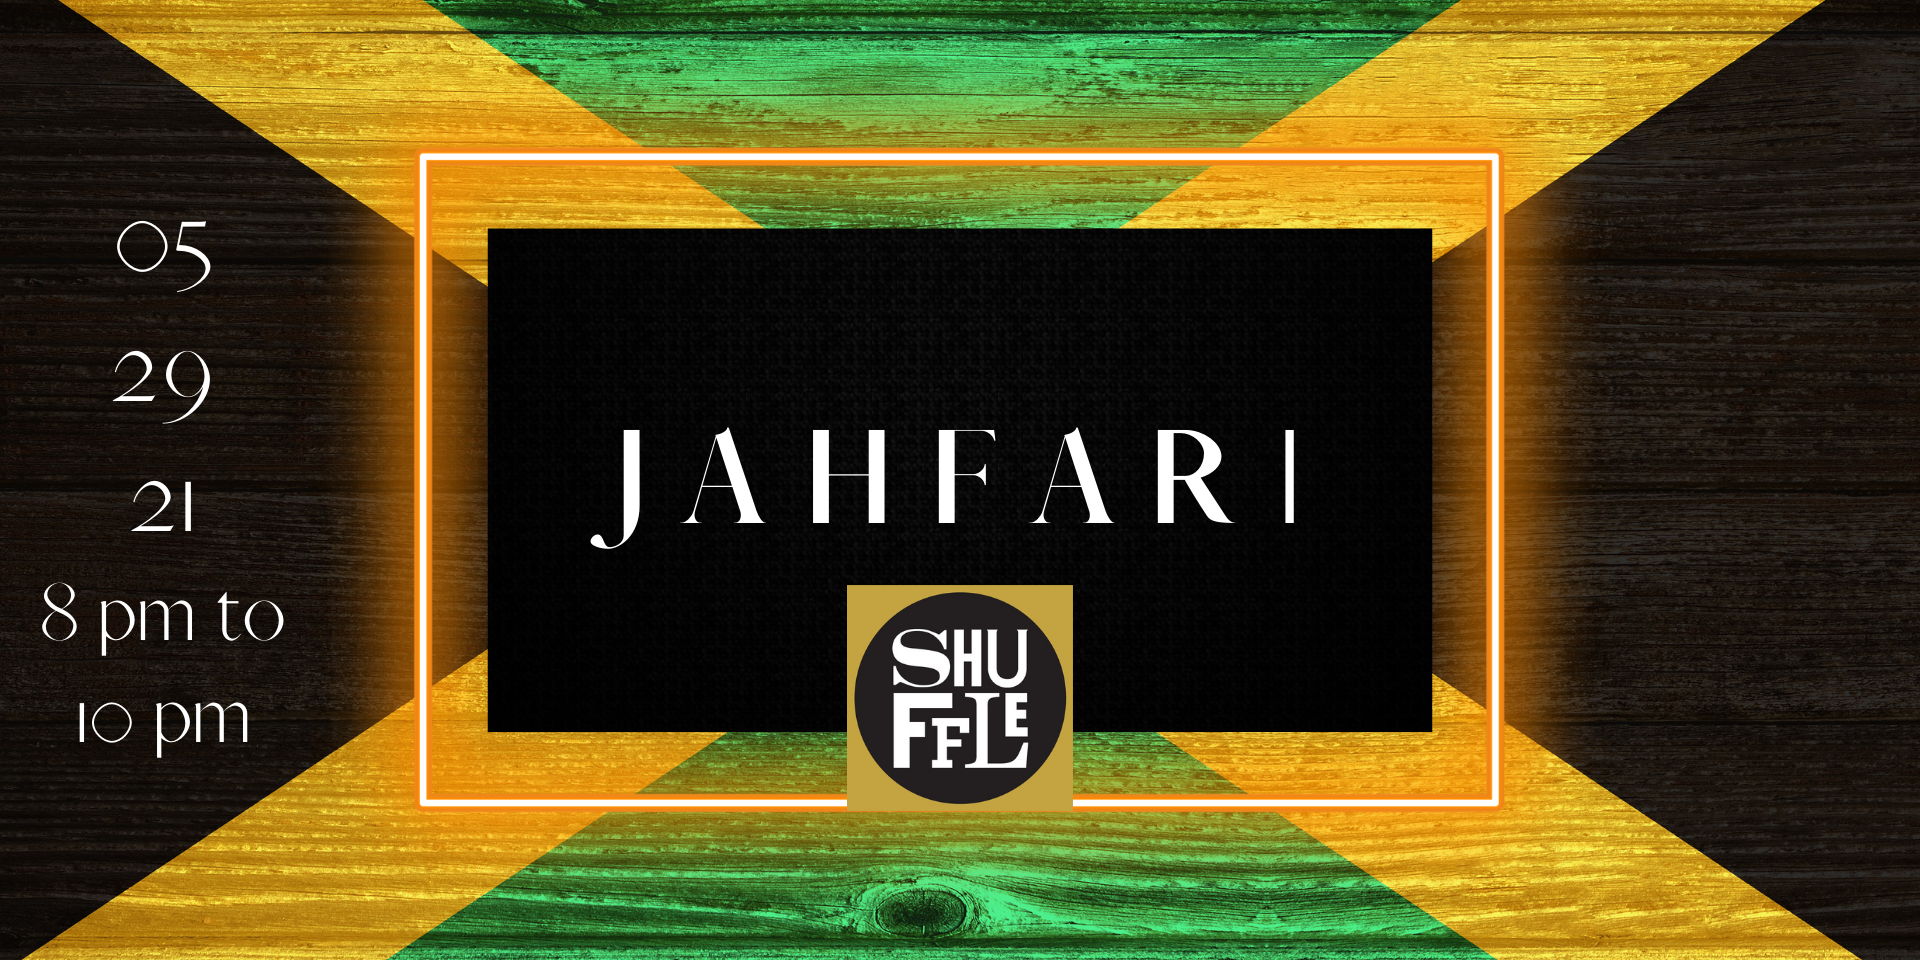 Jahfari promotional image